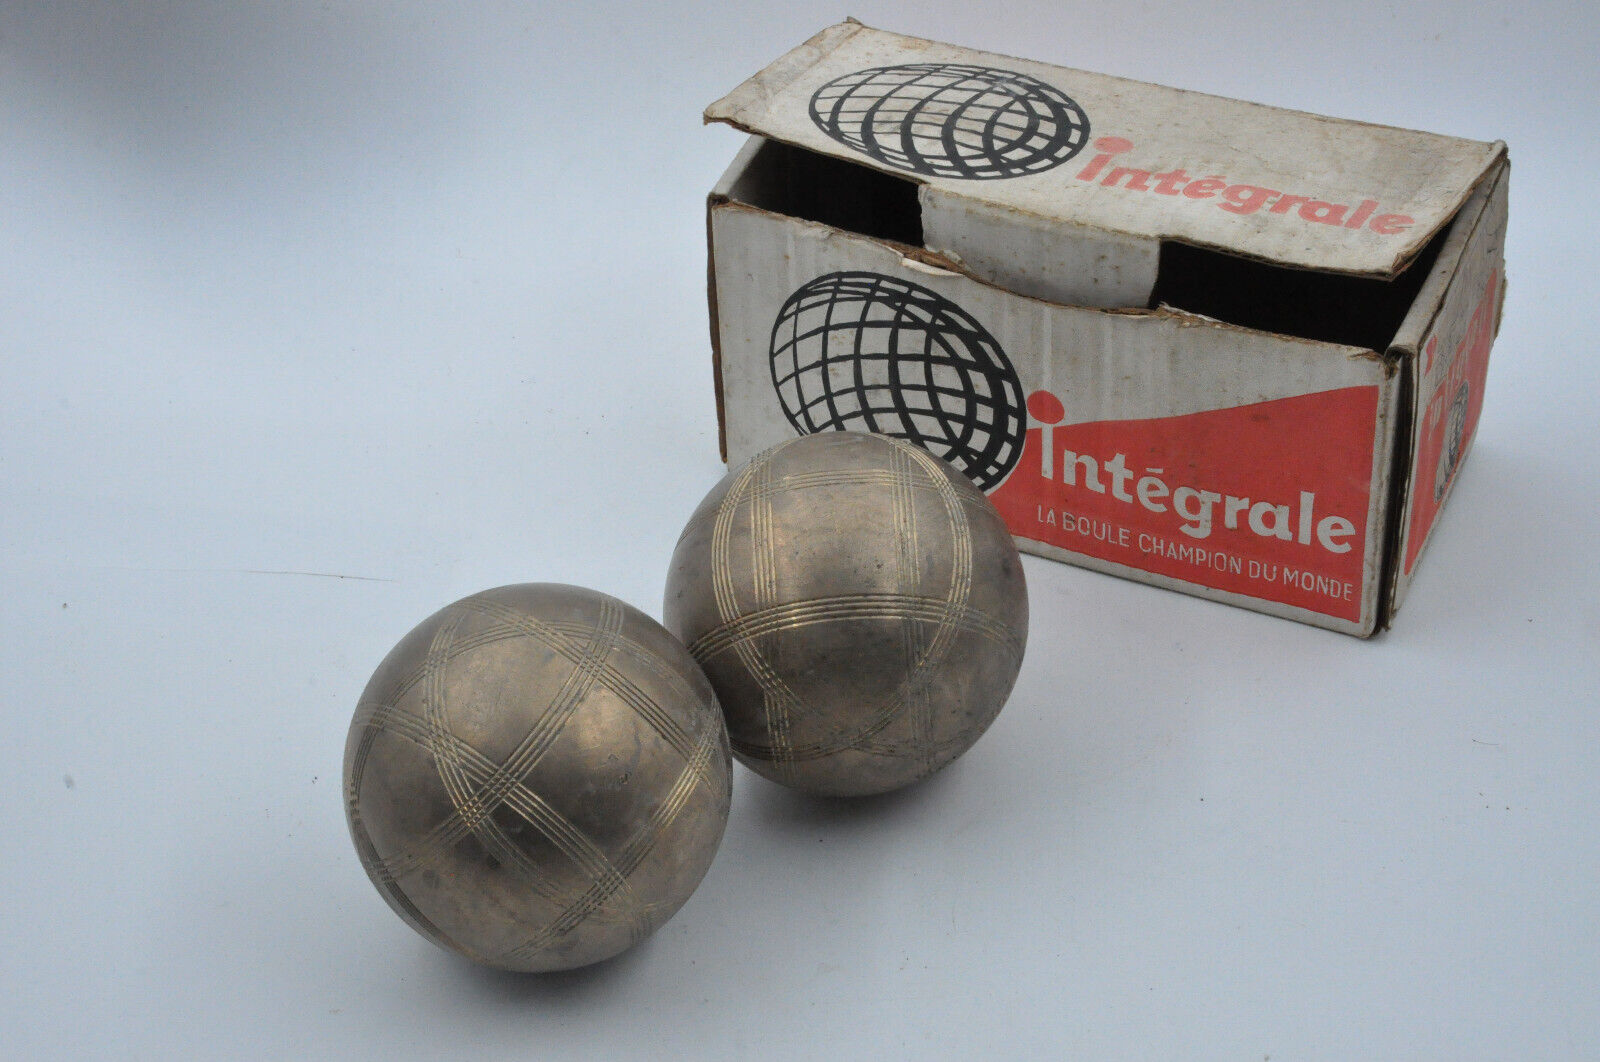 Antique Pair Of Balls Of Long Lyonnaise Integrale Collection Petanque 1